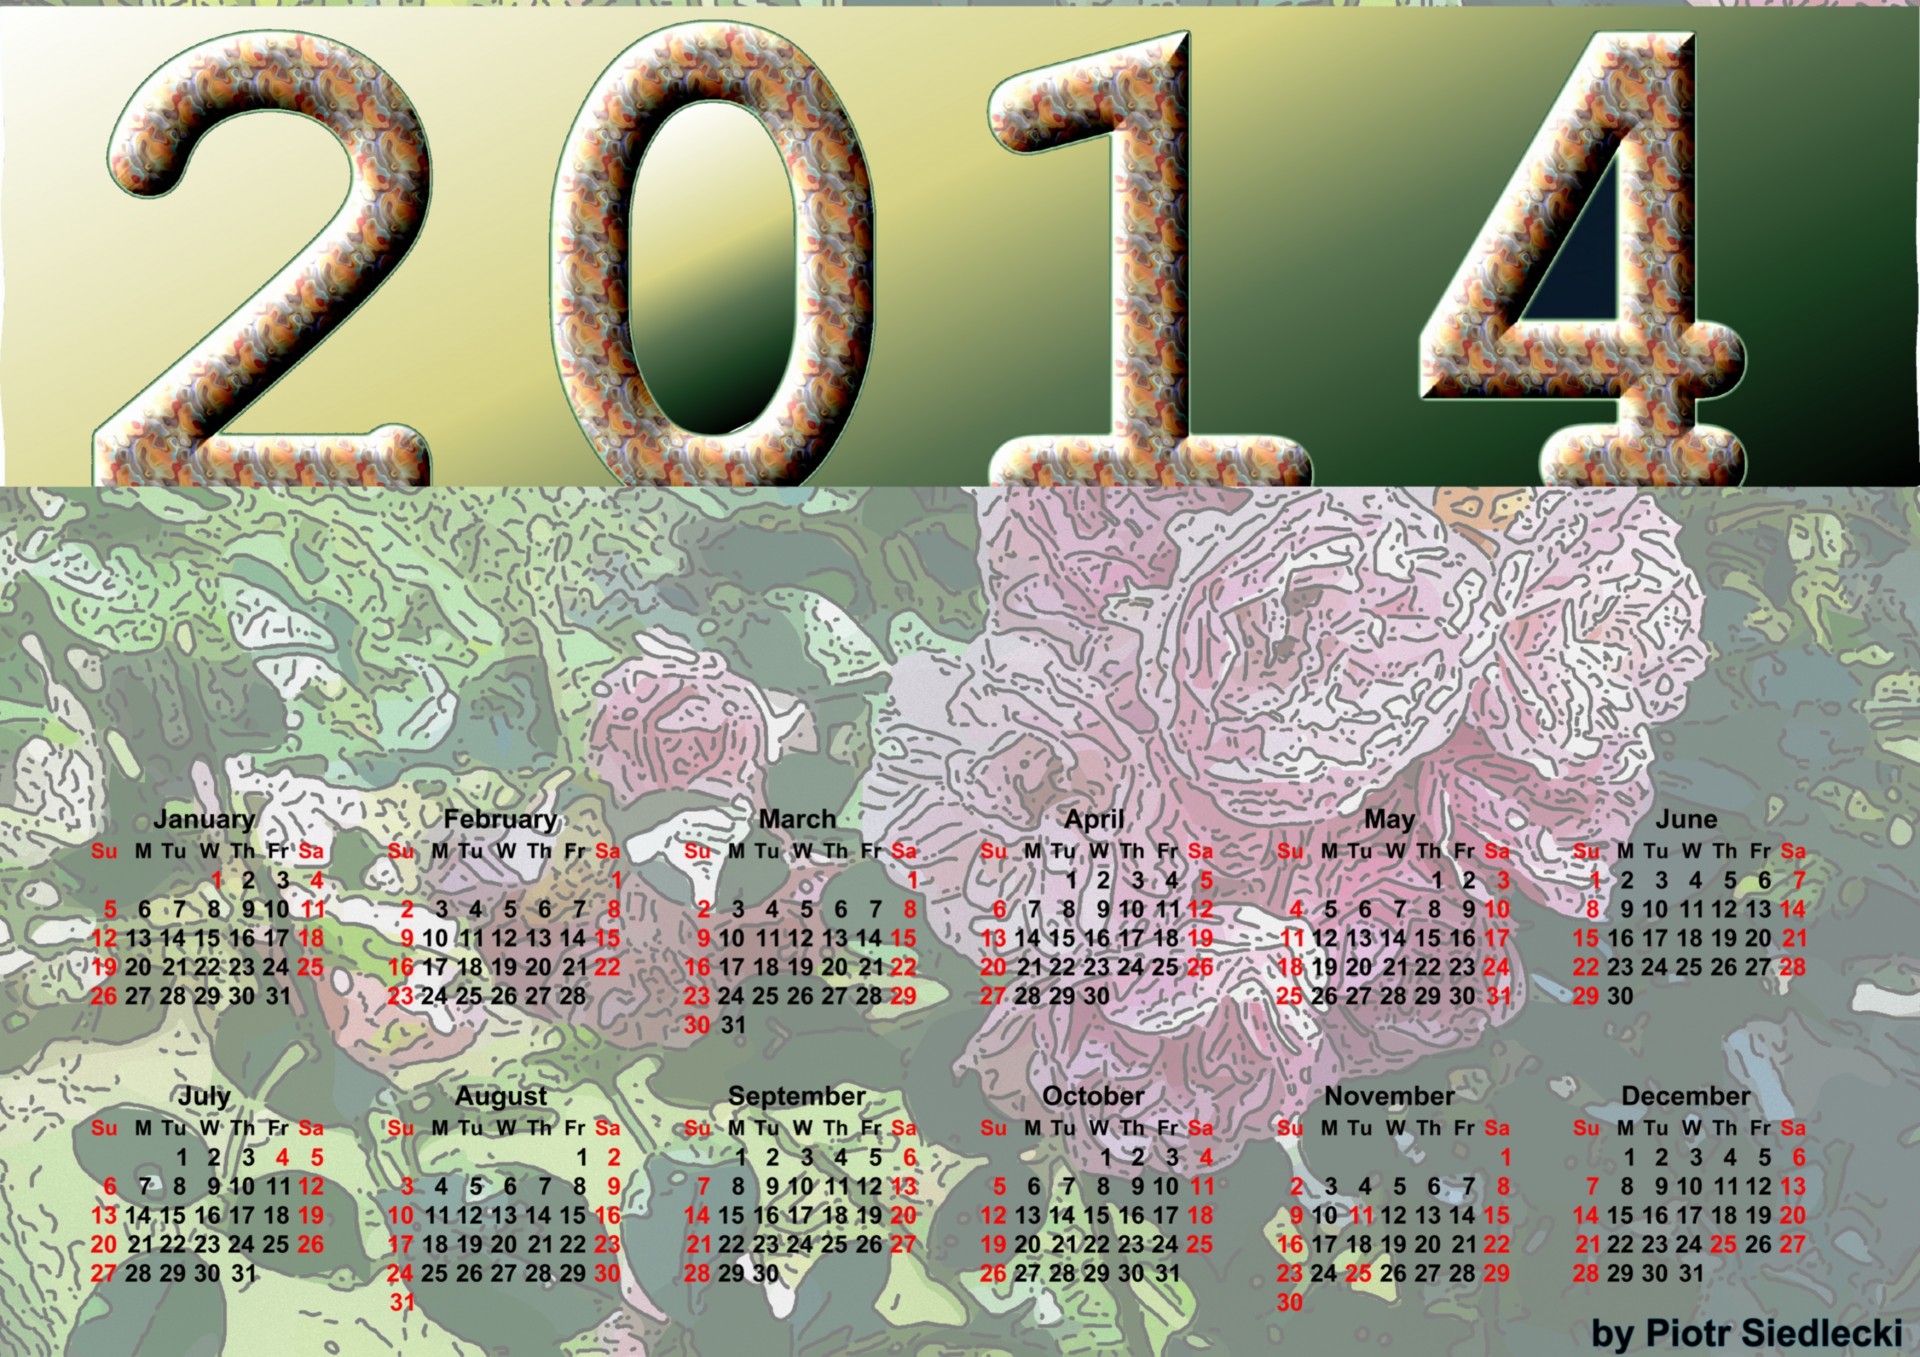 calendar 2014 year free photo